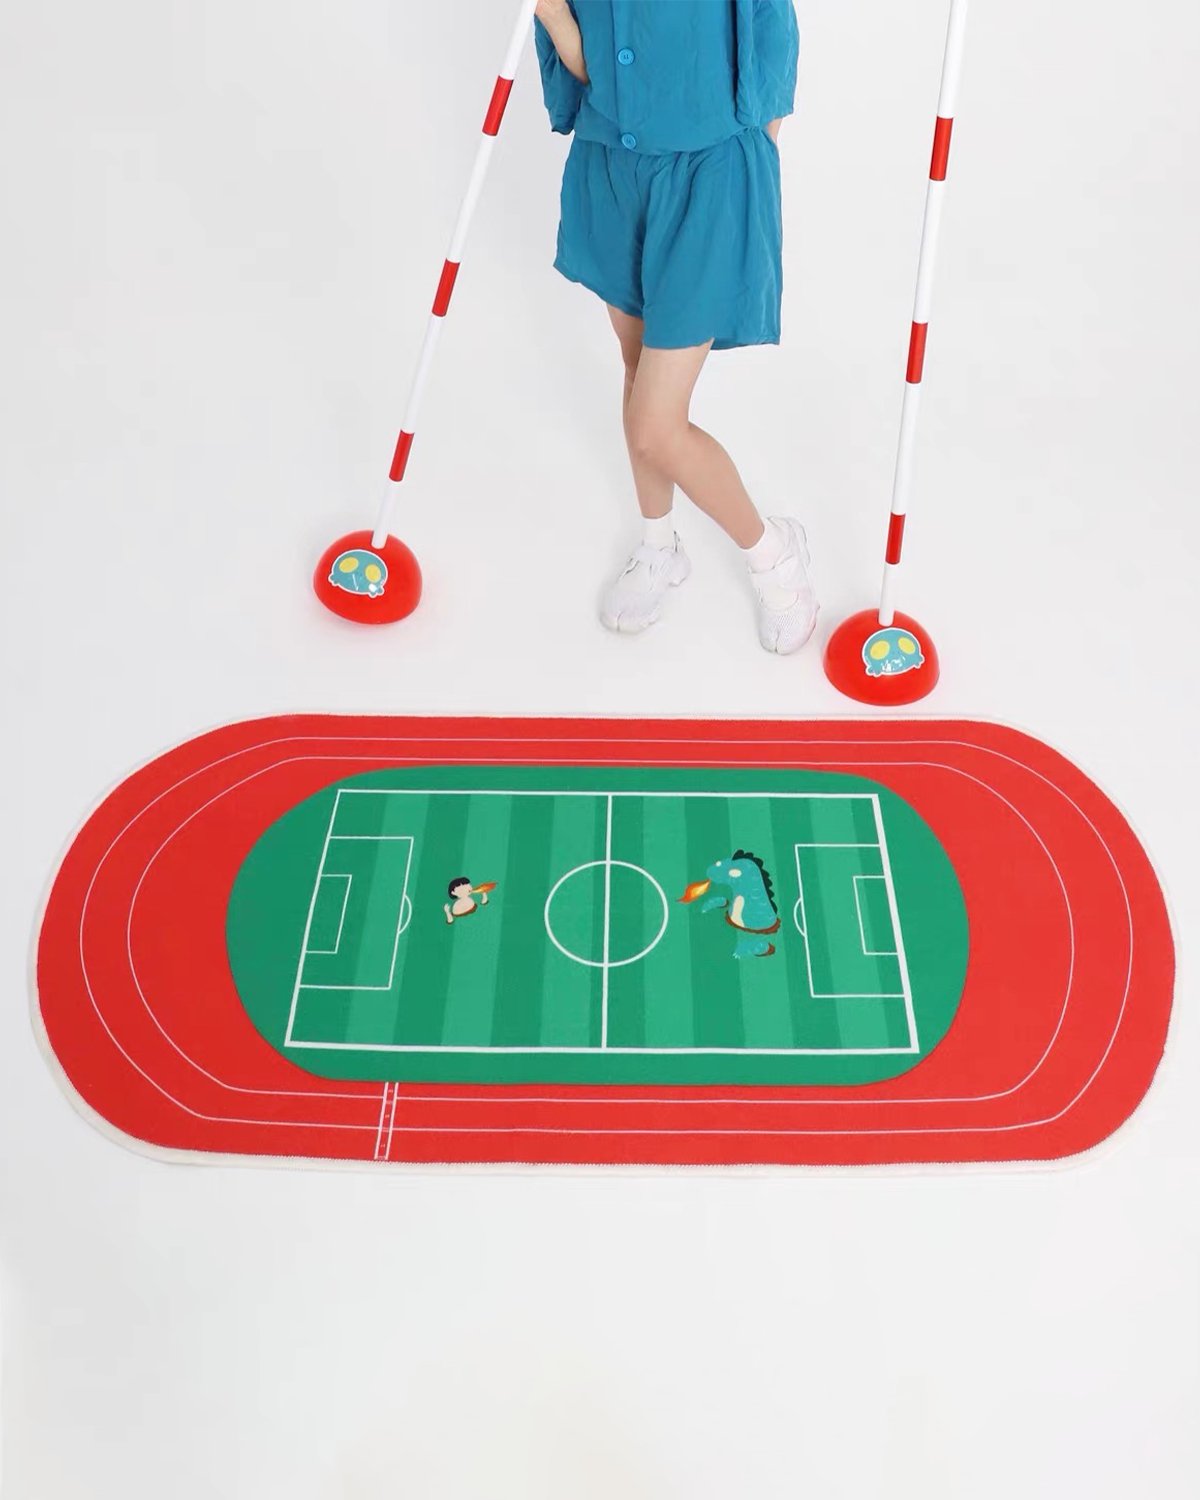 Soccer-field Designer Rugs for Living Spaces